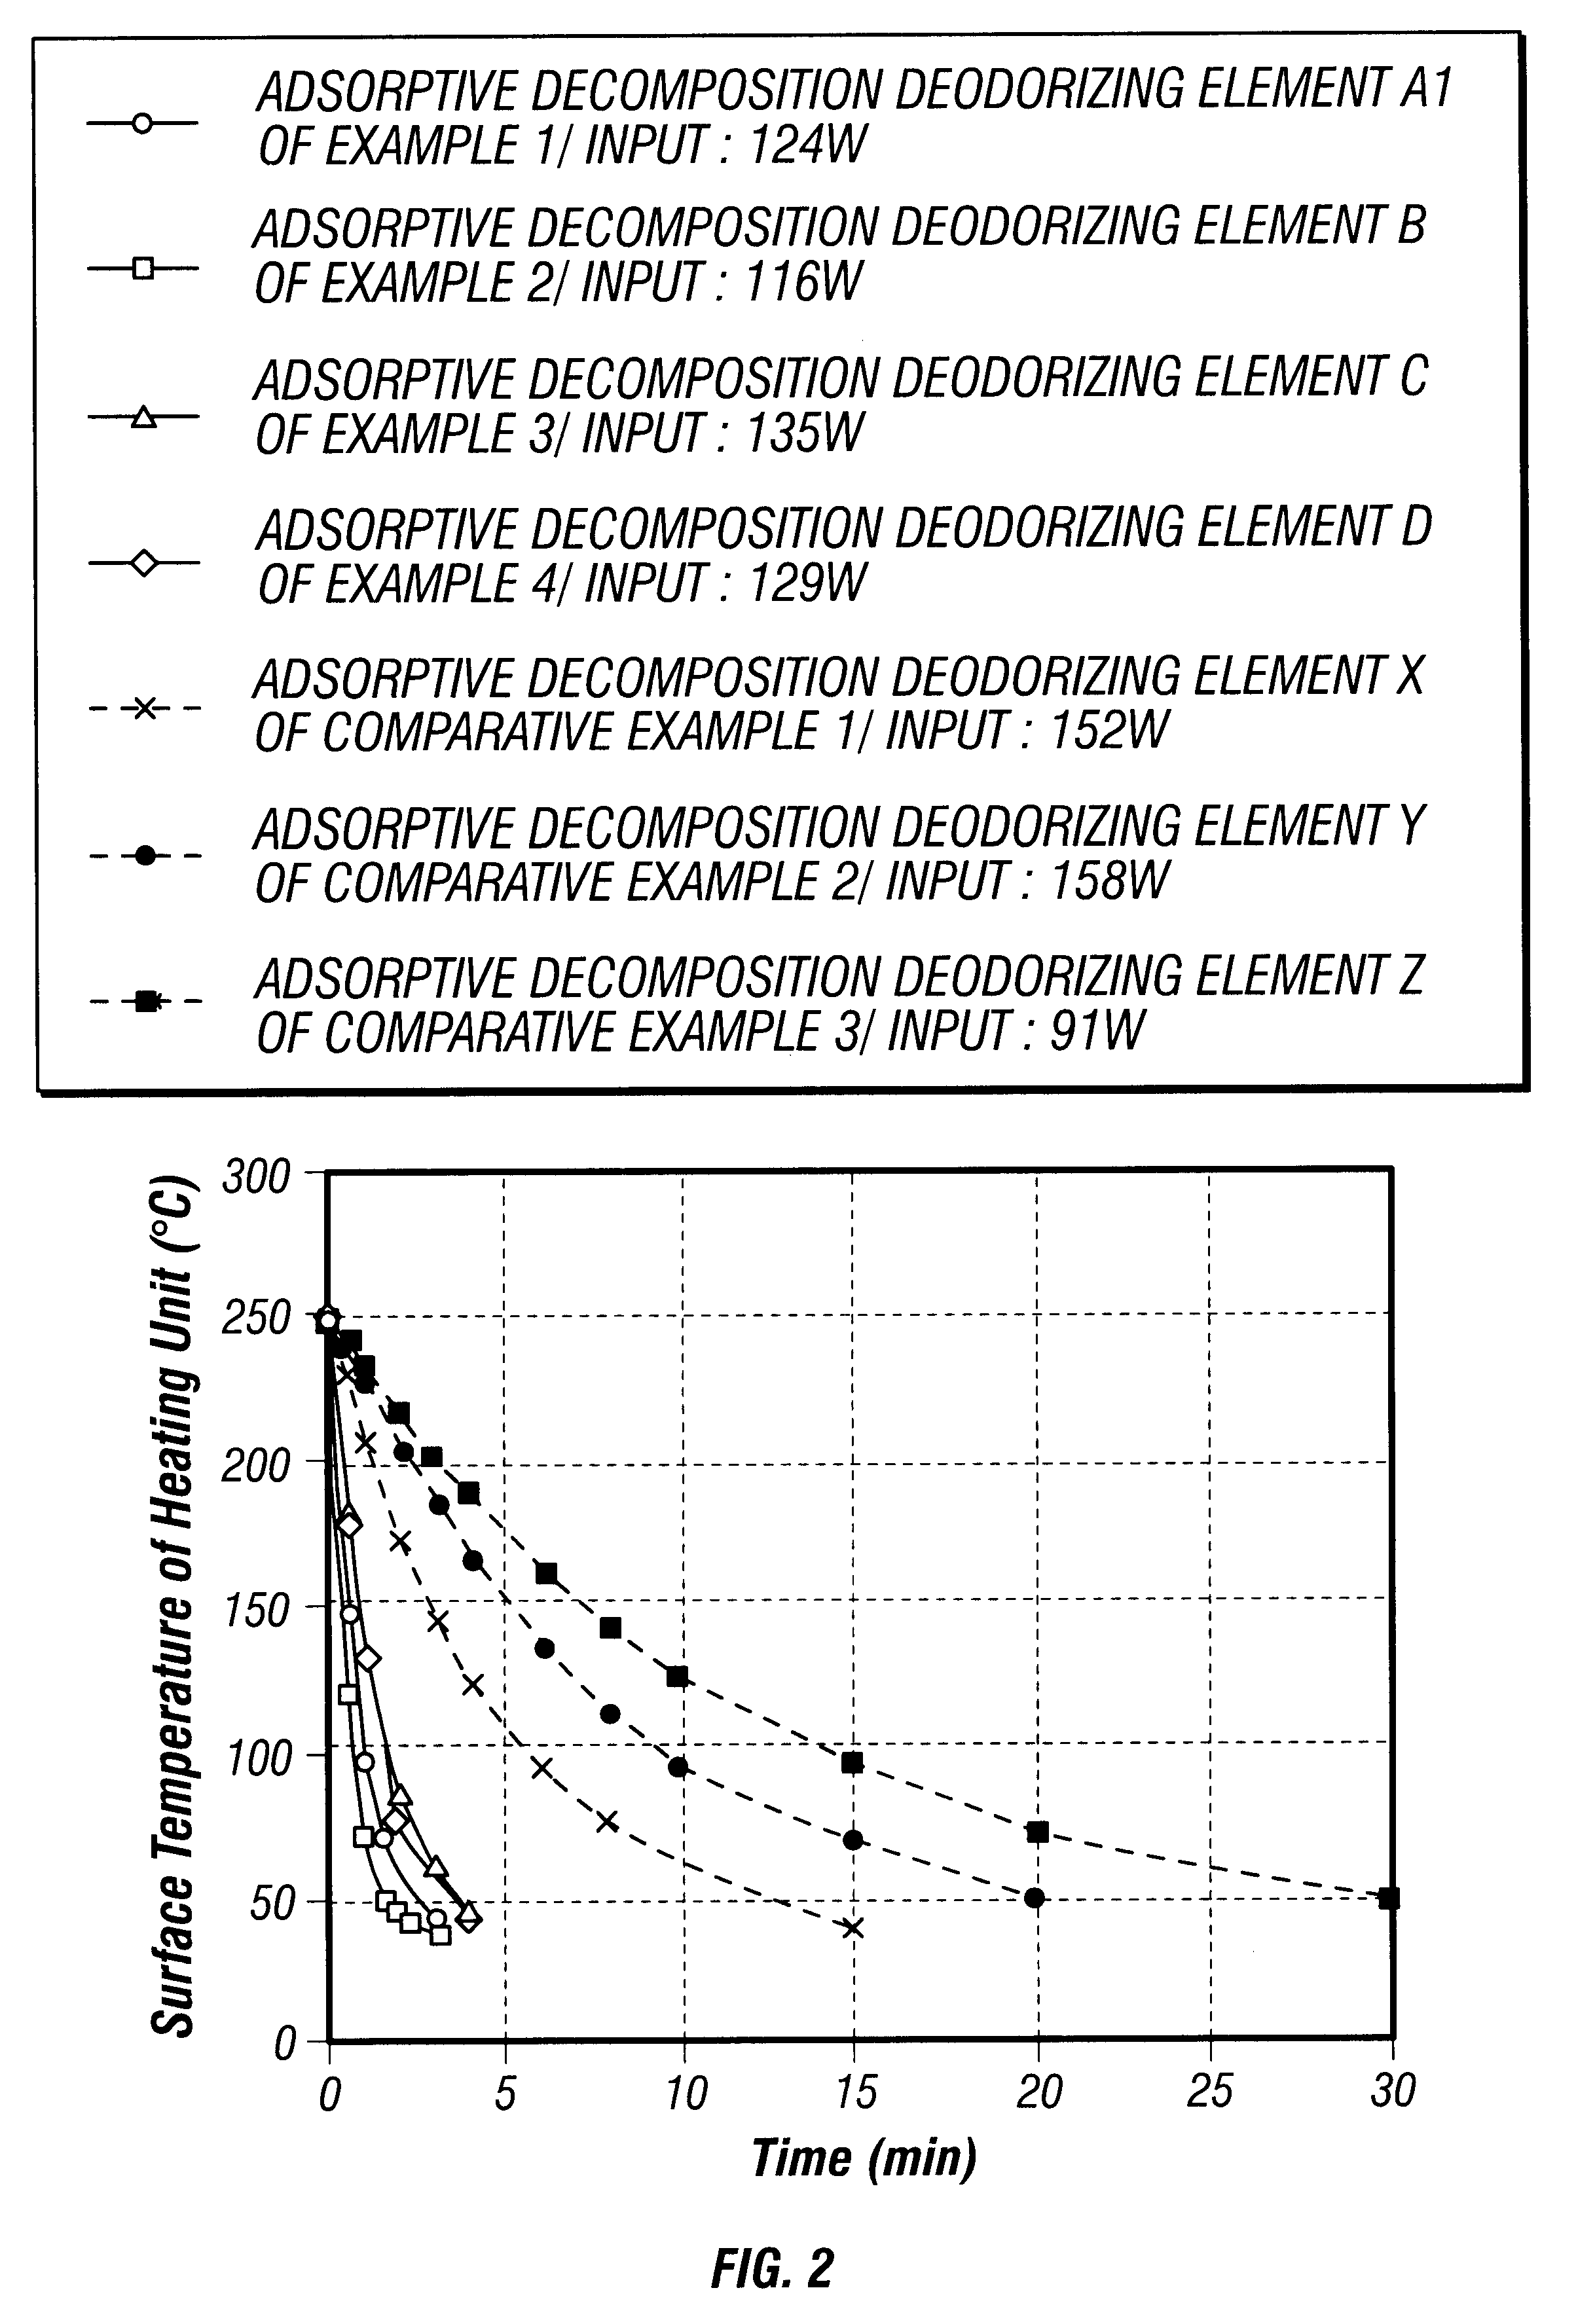 Adsorption, decomposition deodorization element